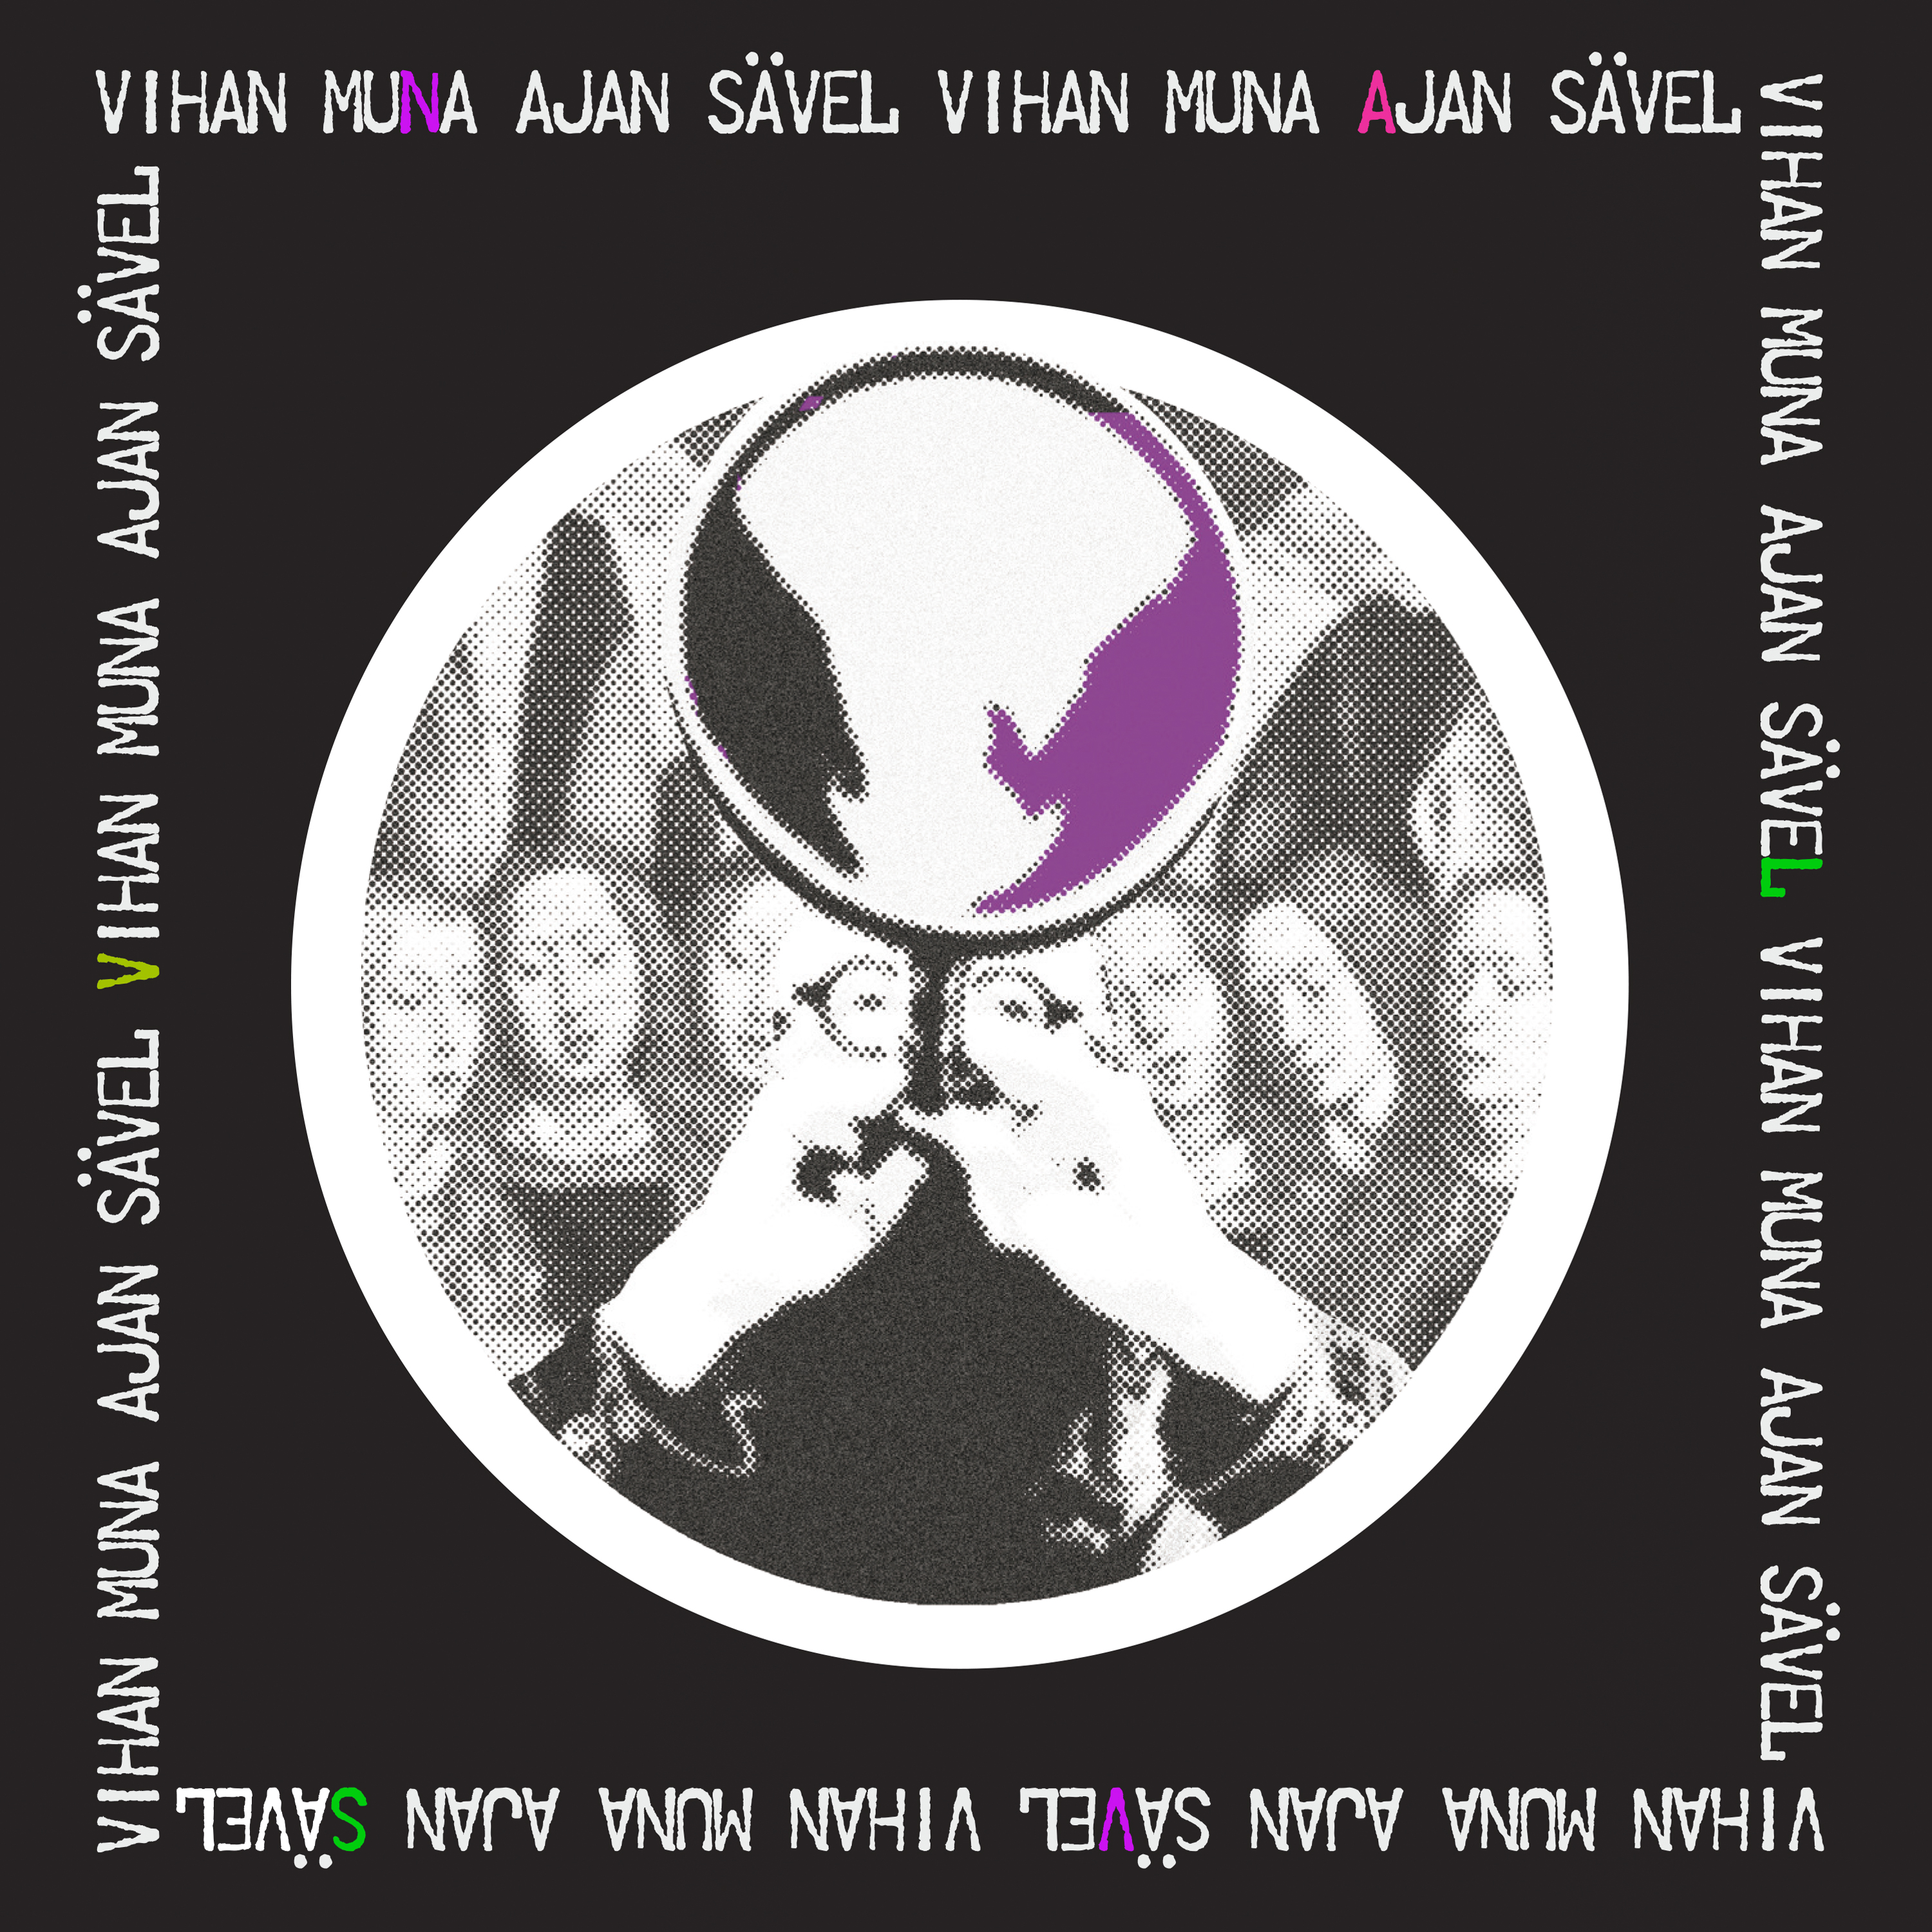 Vihan Muna - Ajan s vel - CD